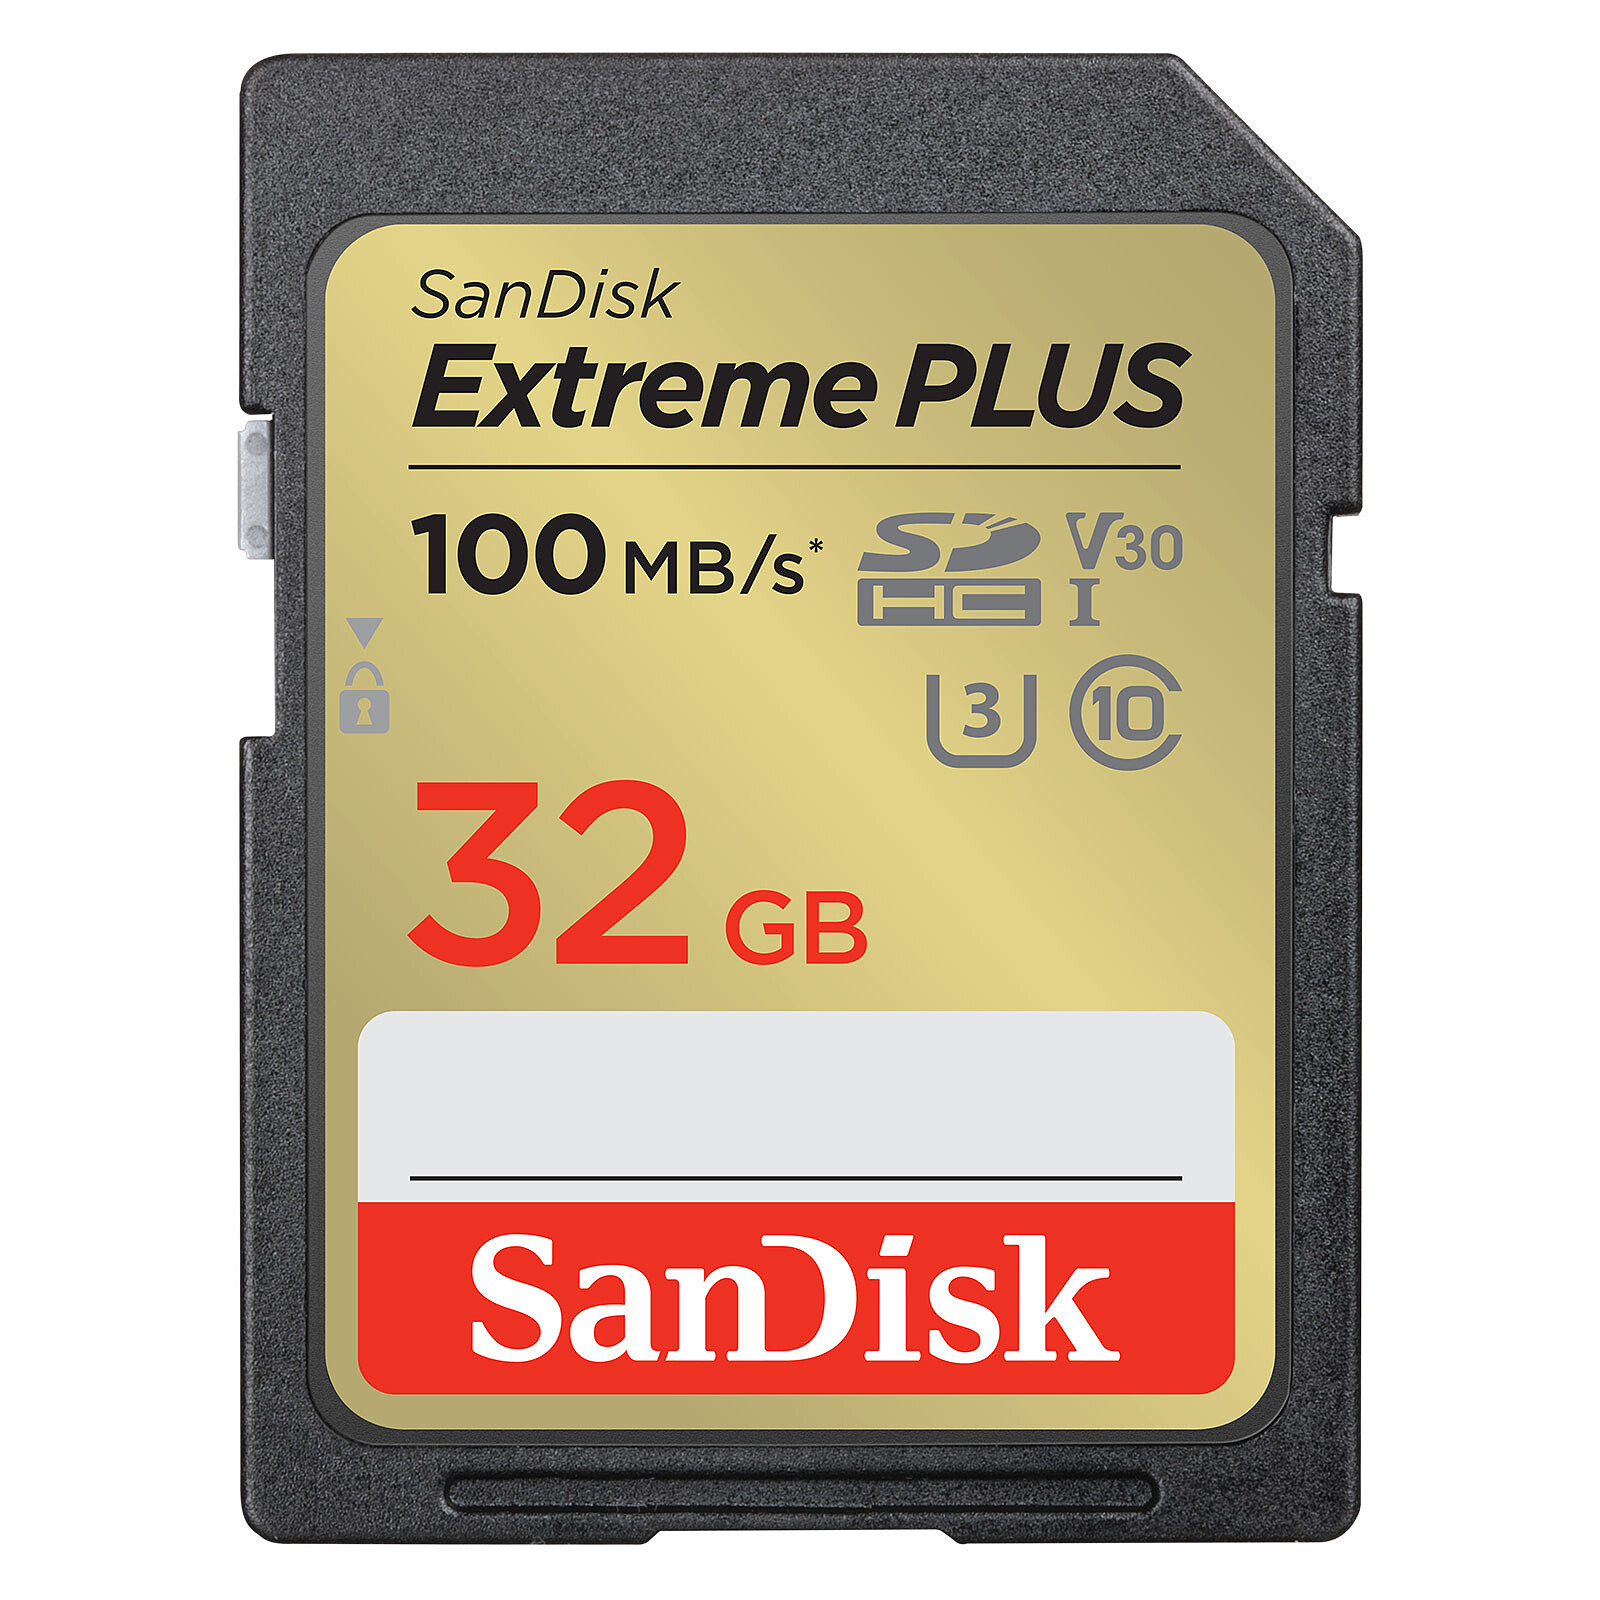 SanDisk Extreme PLUS SDHC UHS-I 32 GB - Memory card - LDLC 3-year warranty